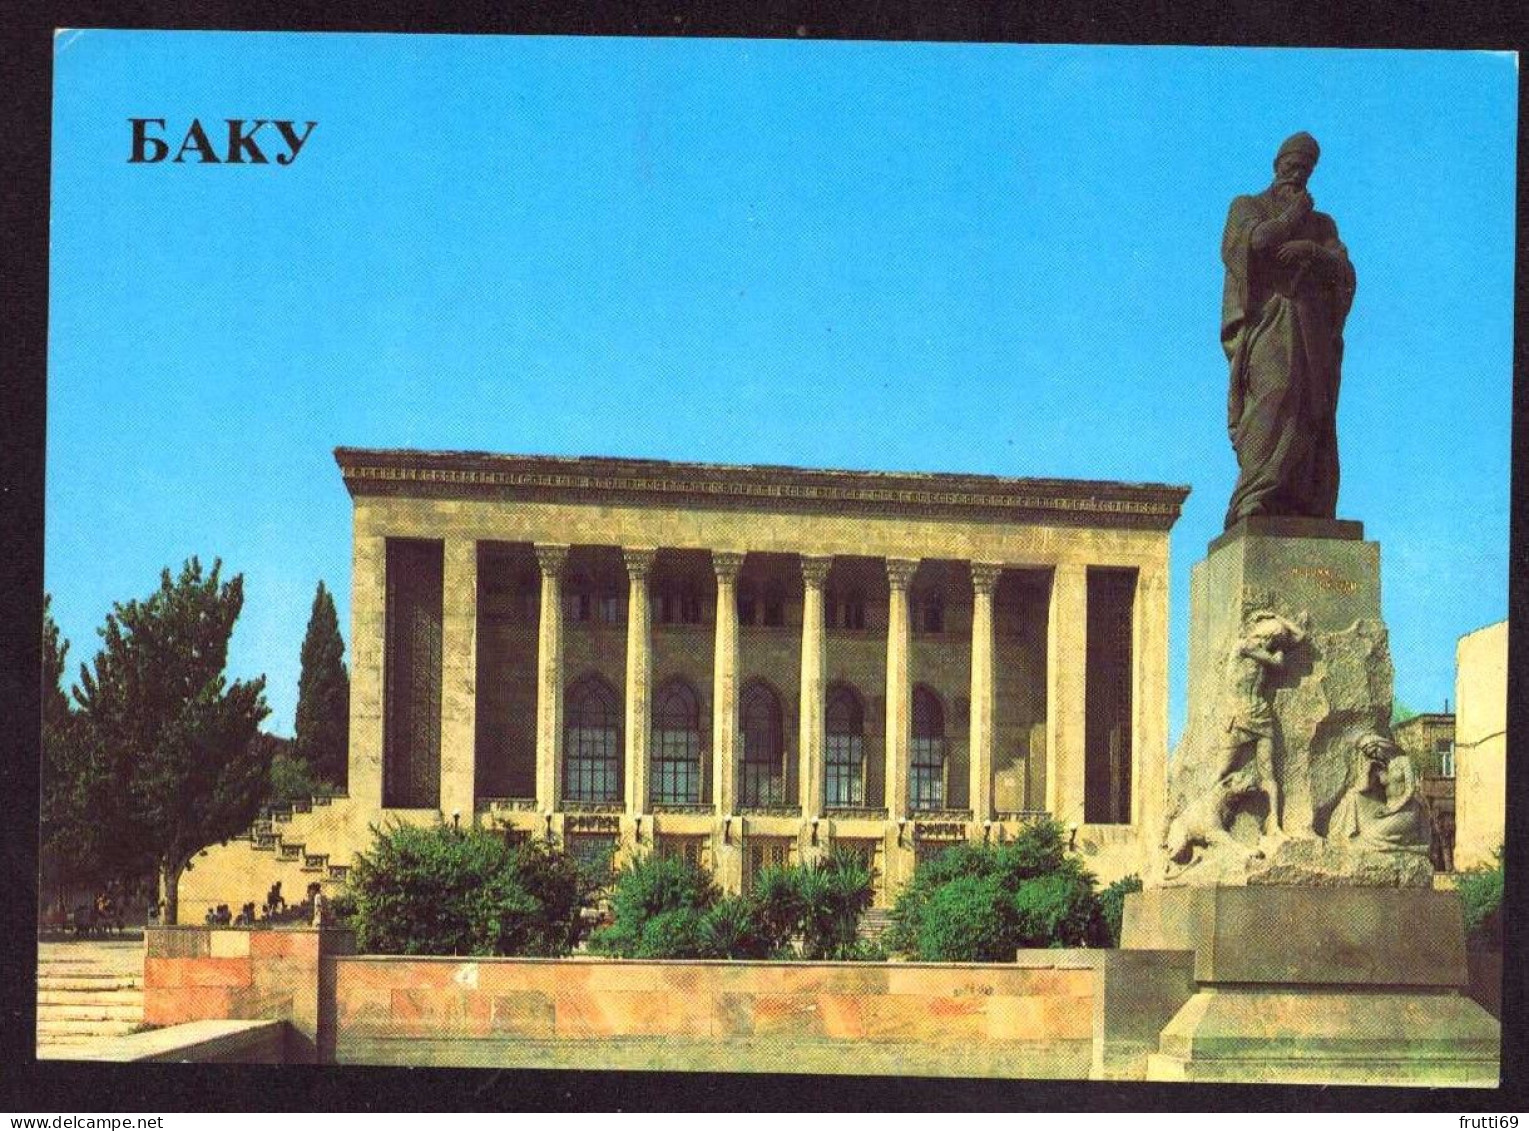 AK 212366 AZERBAIDJAN - Baku - Monument To Fizuli - Azerbaïjan